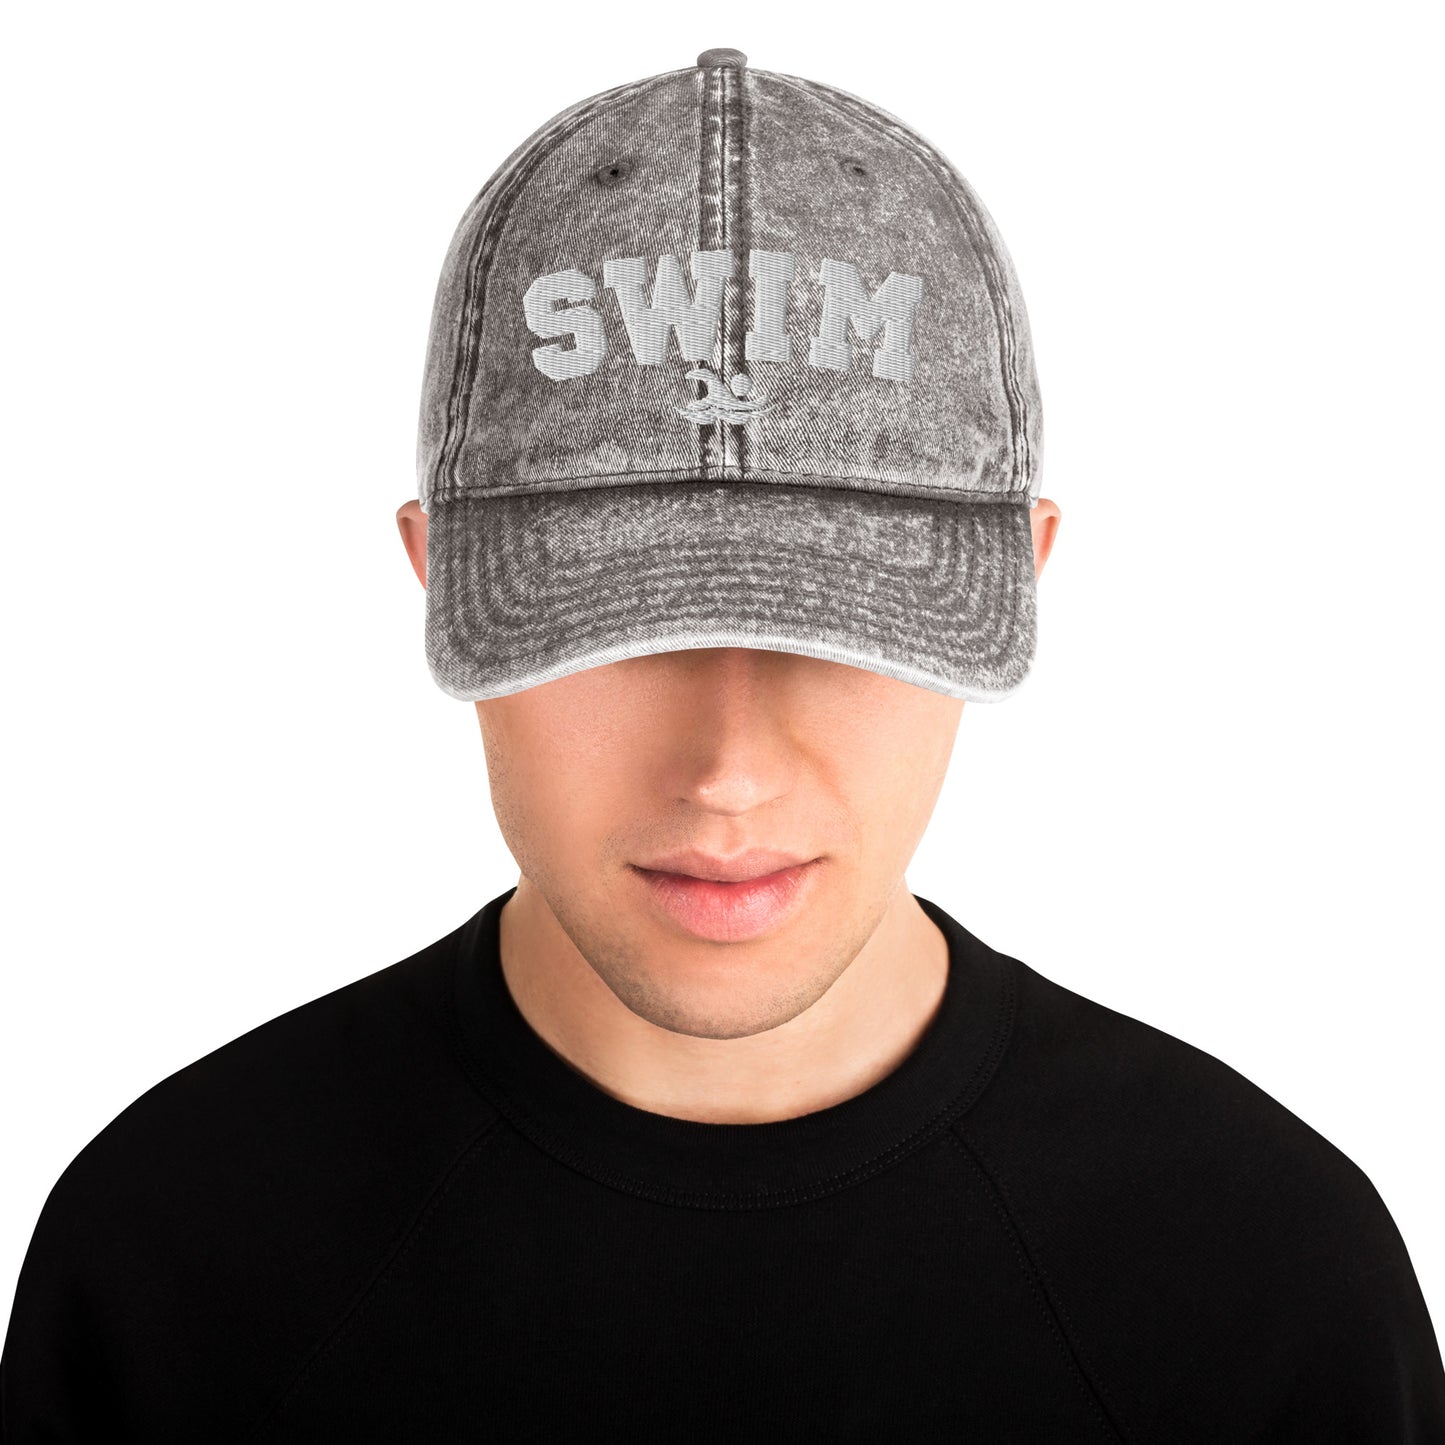 Swim Athletic Vintage Cotton Twill Cap - TrendySwimmer